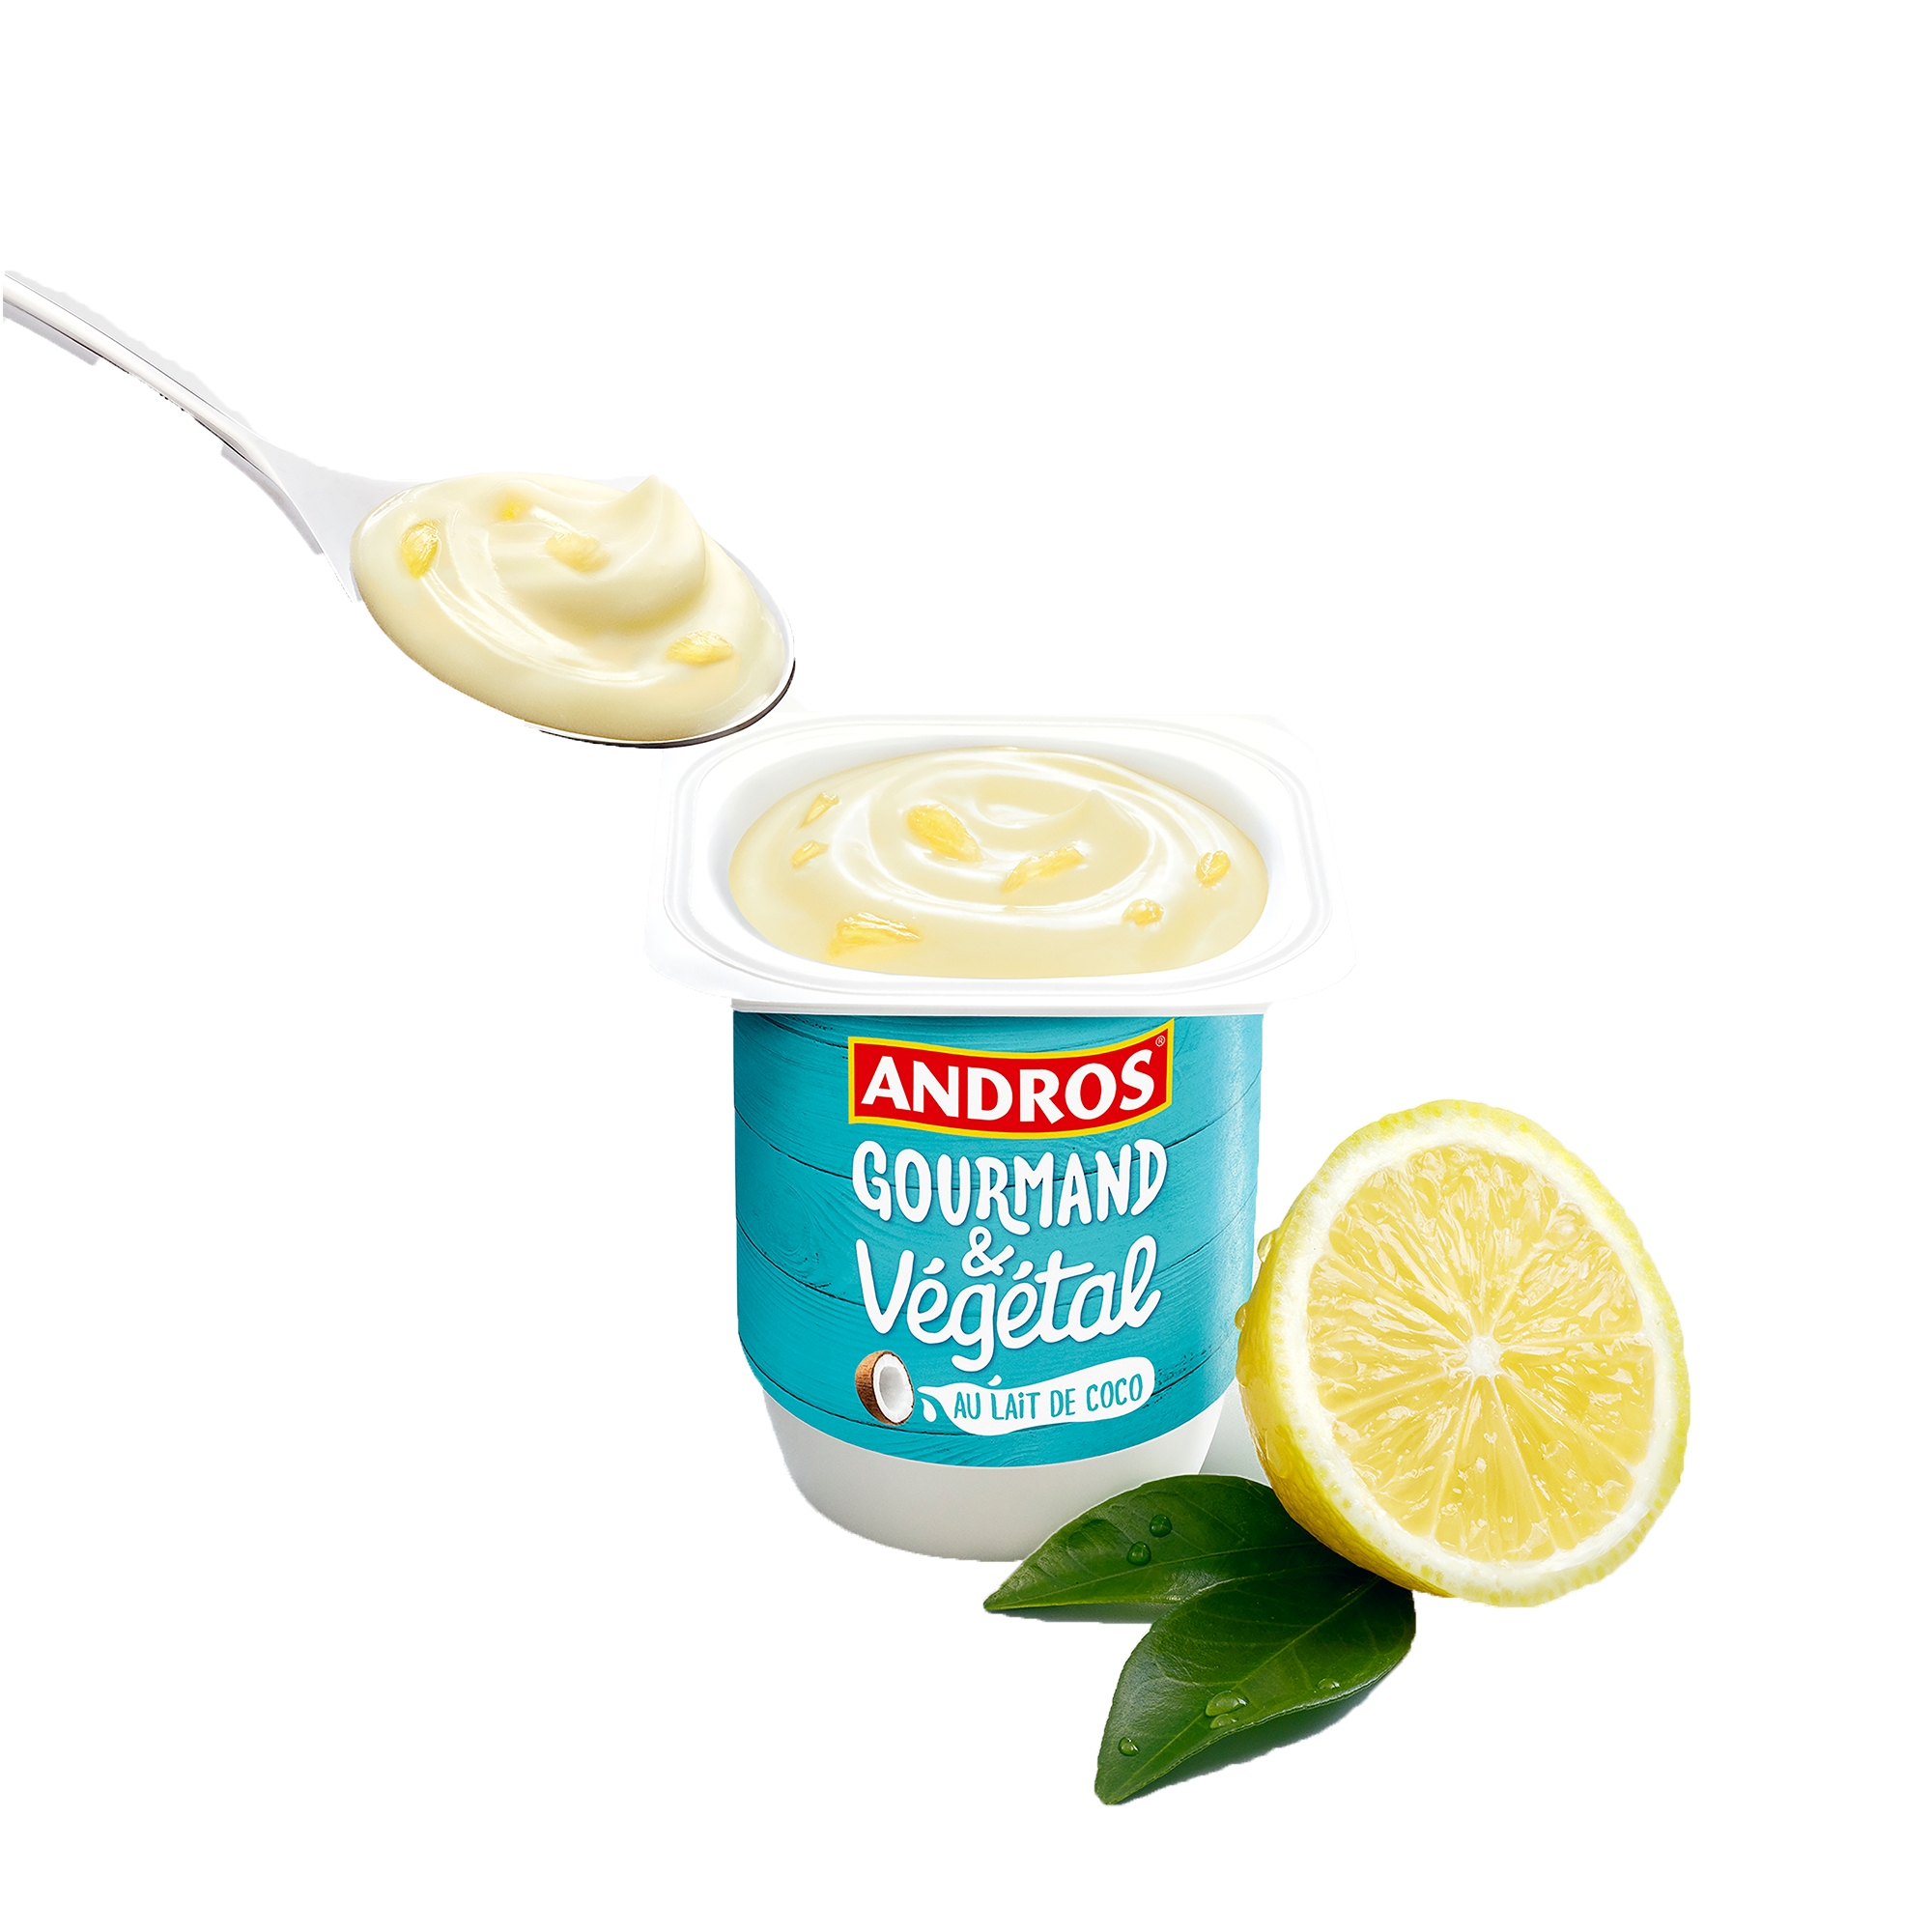 Brassé citron Andros Gourmand & Végétal